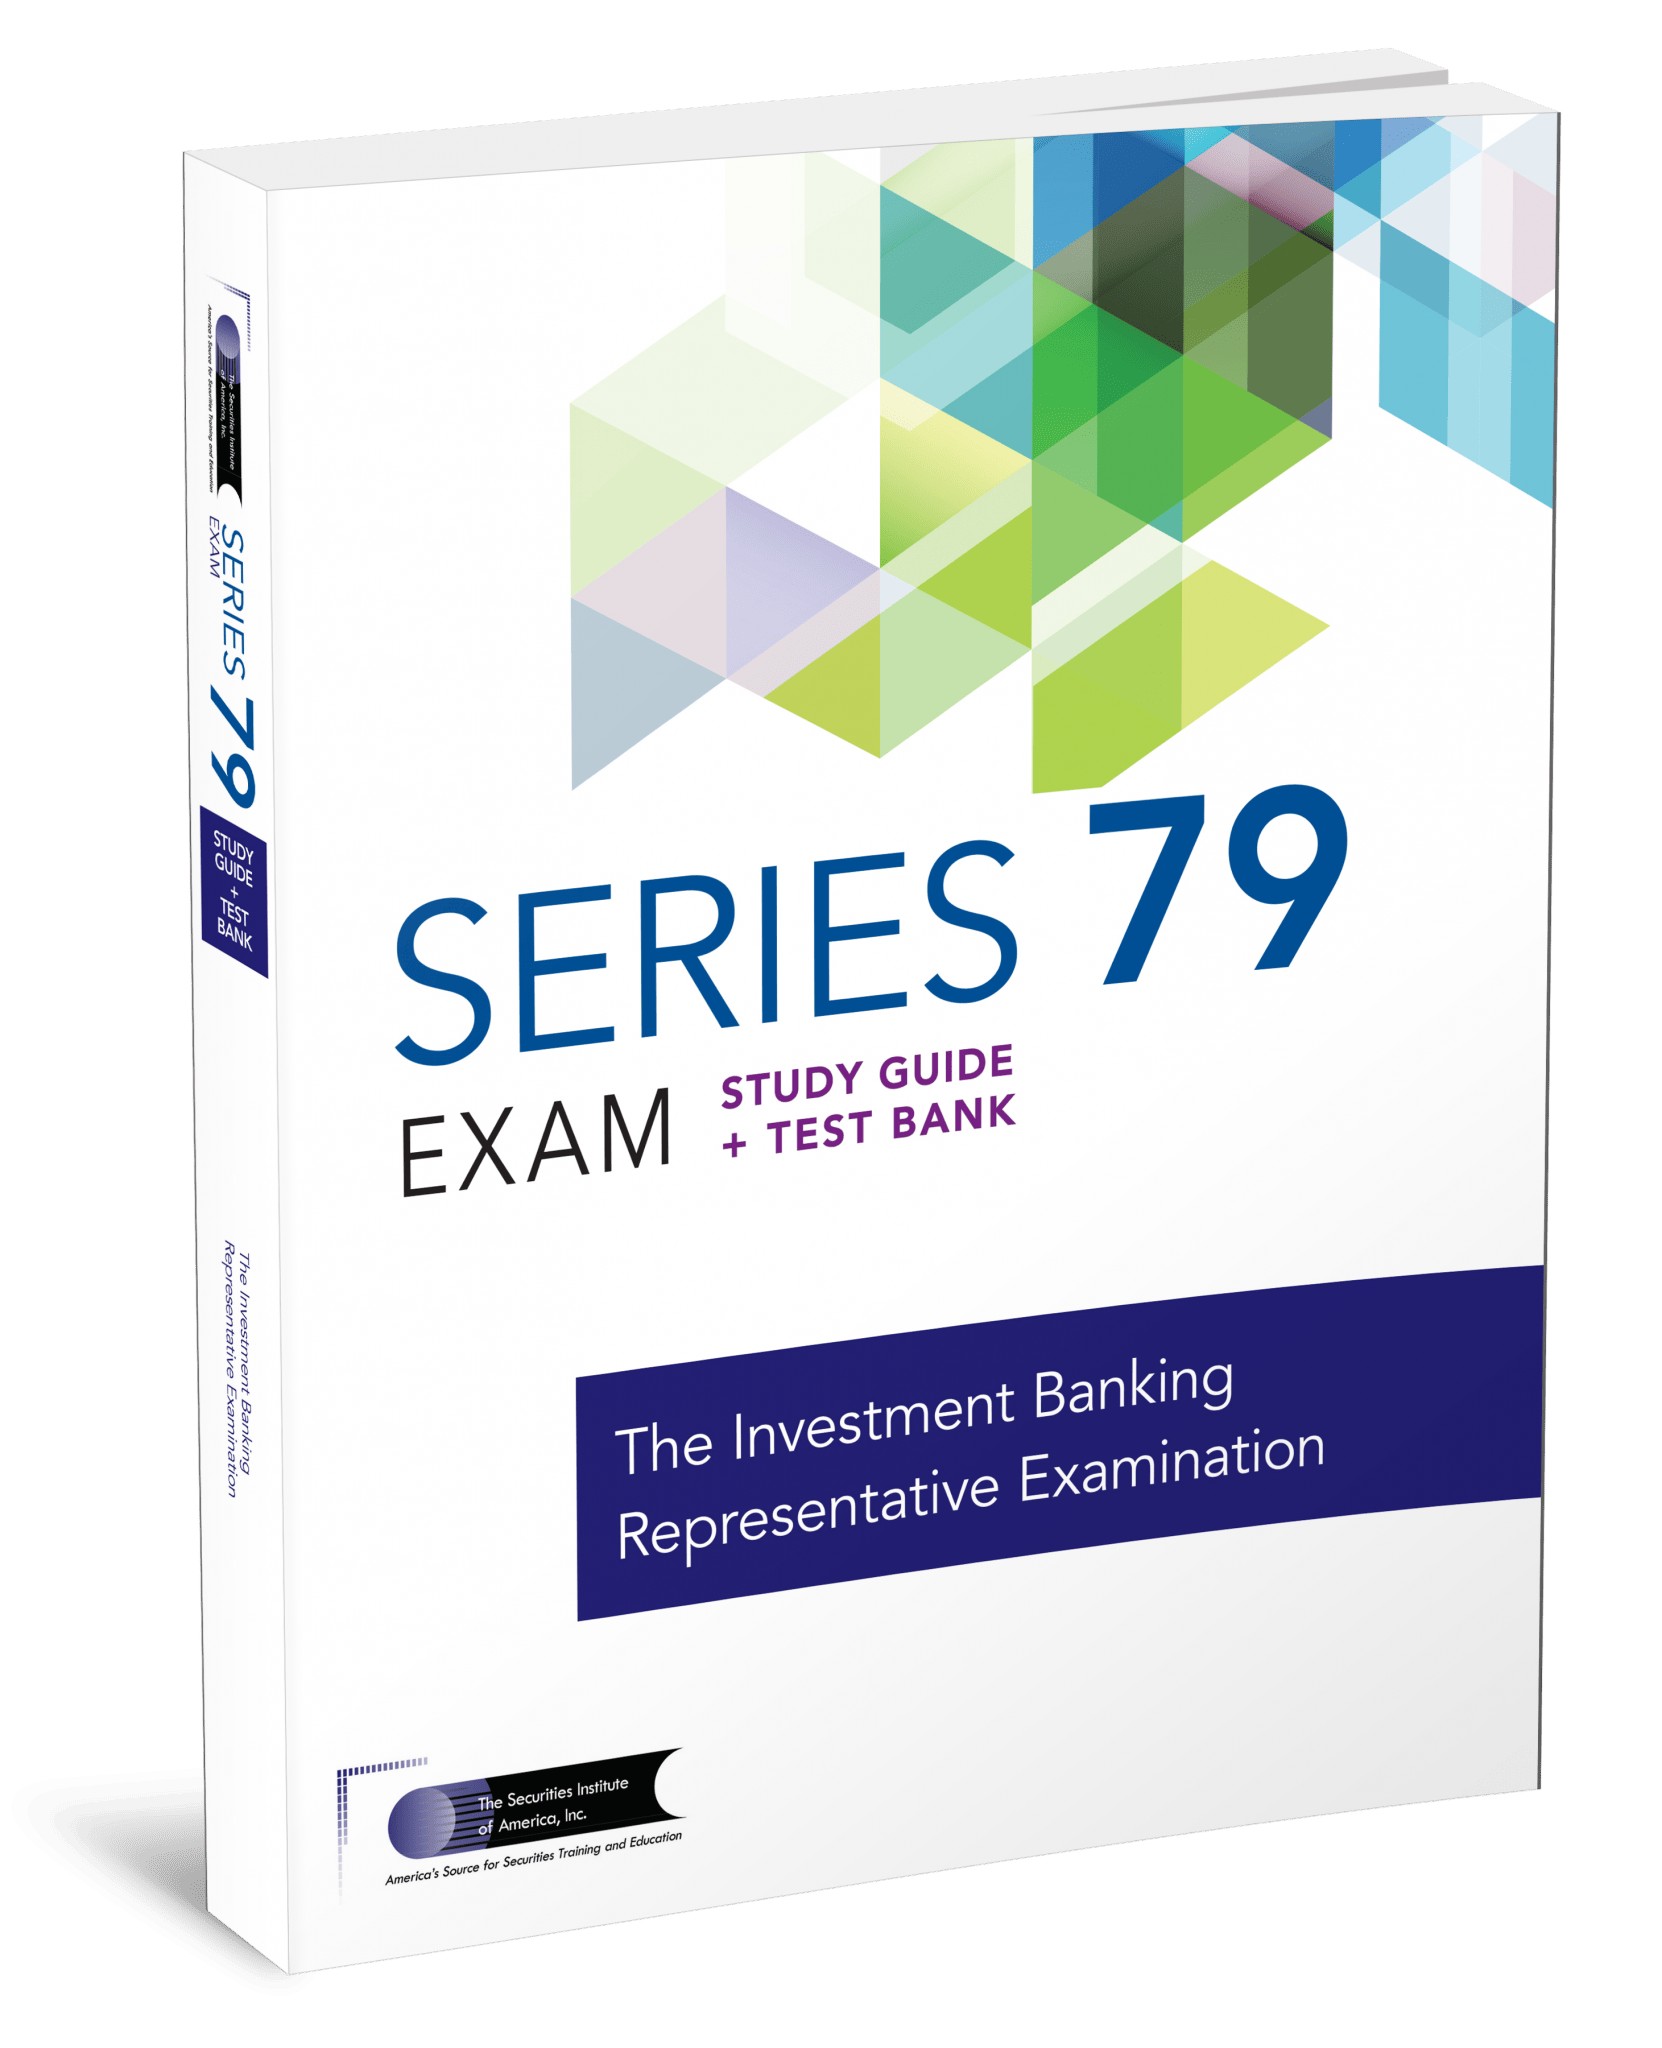 Series 79 Exam Textbook & Study Guide